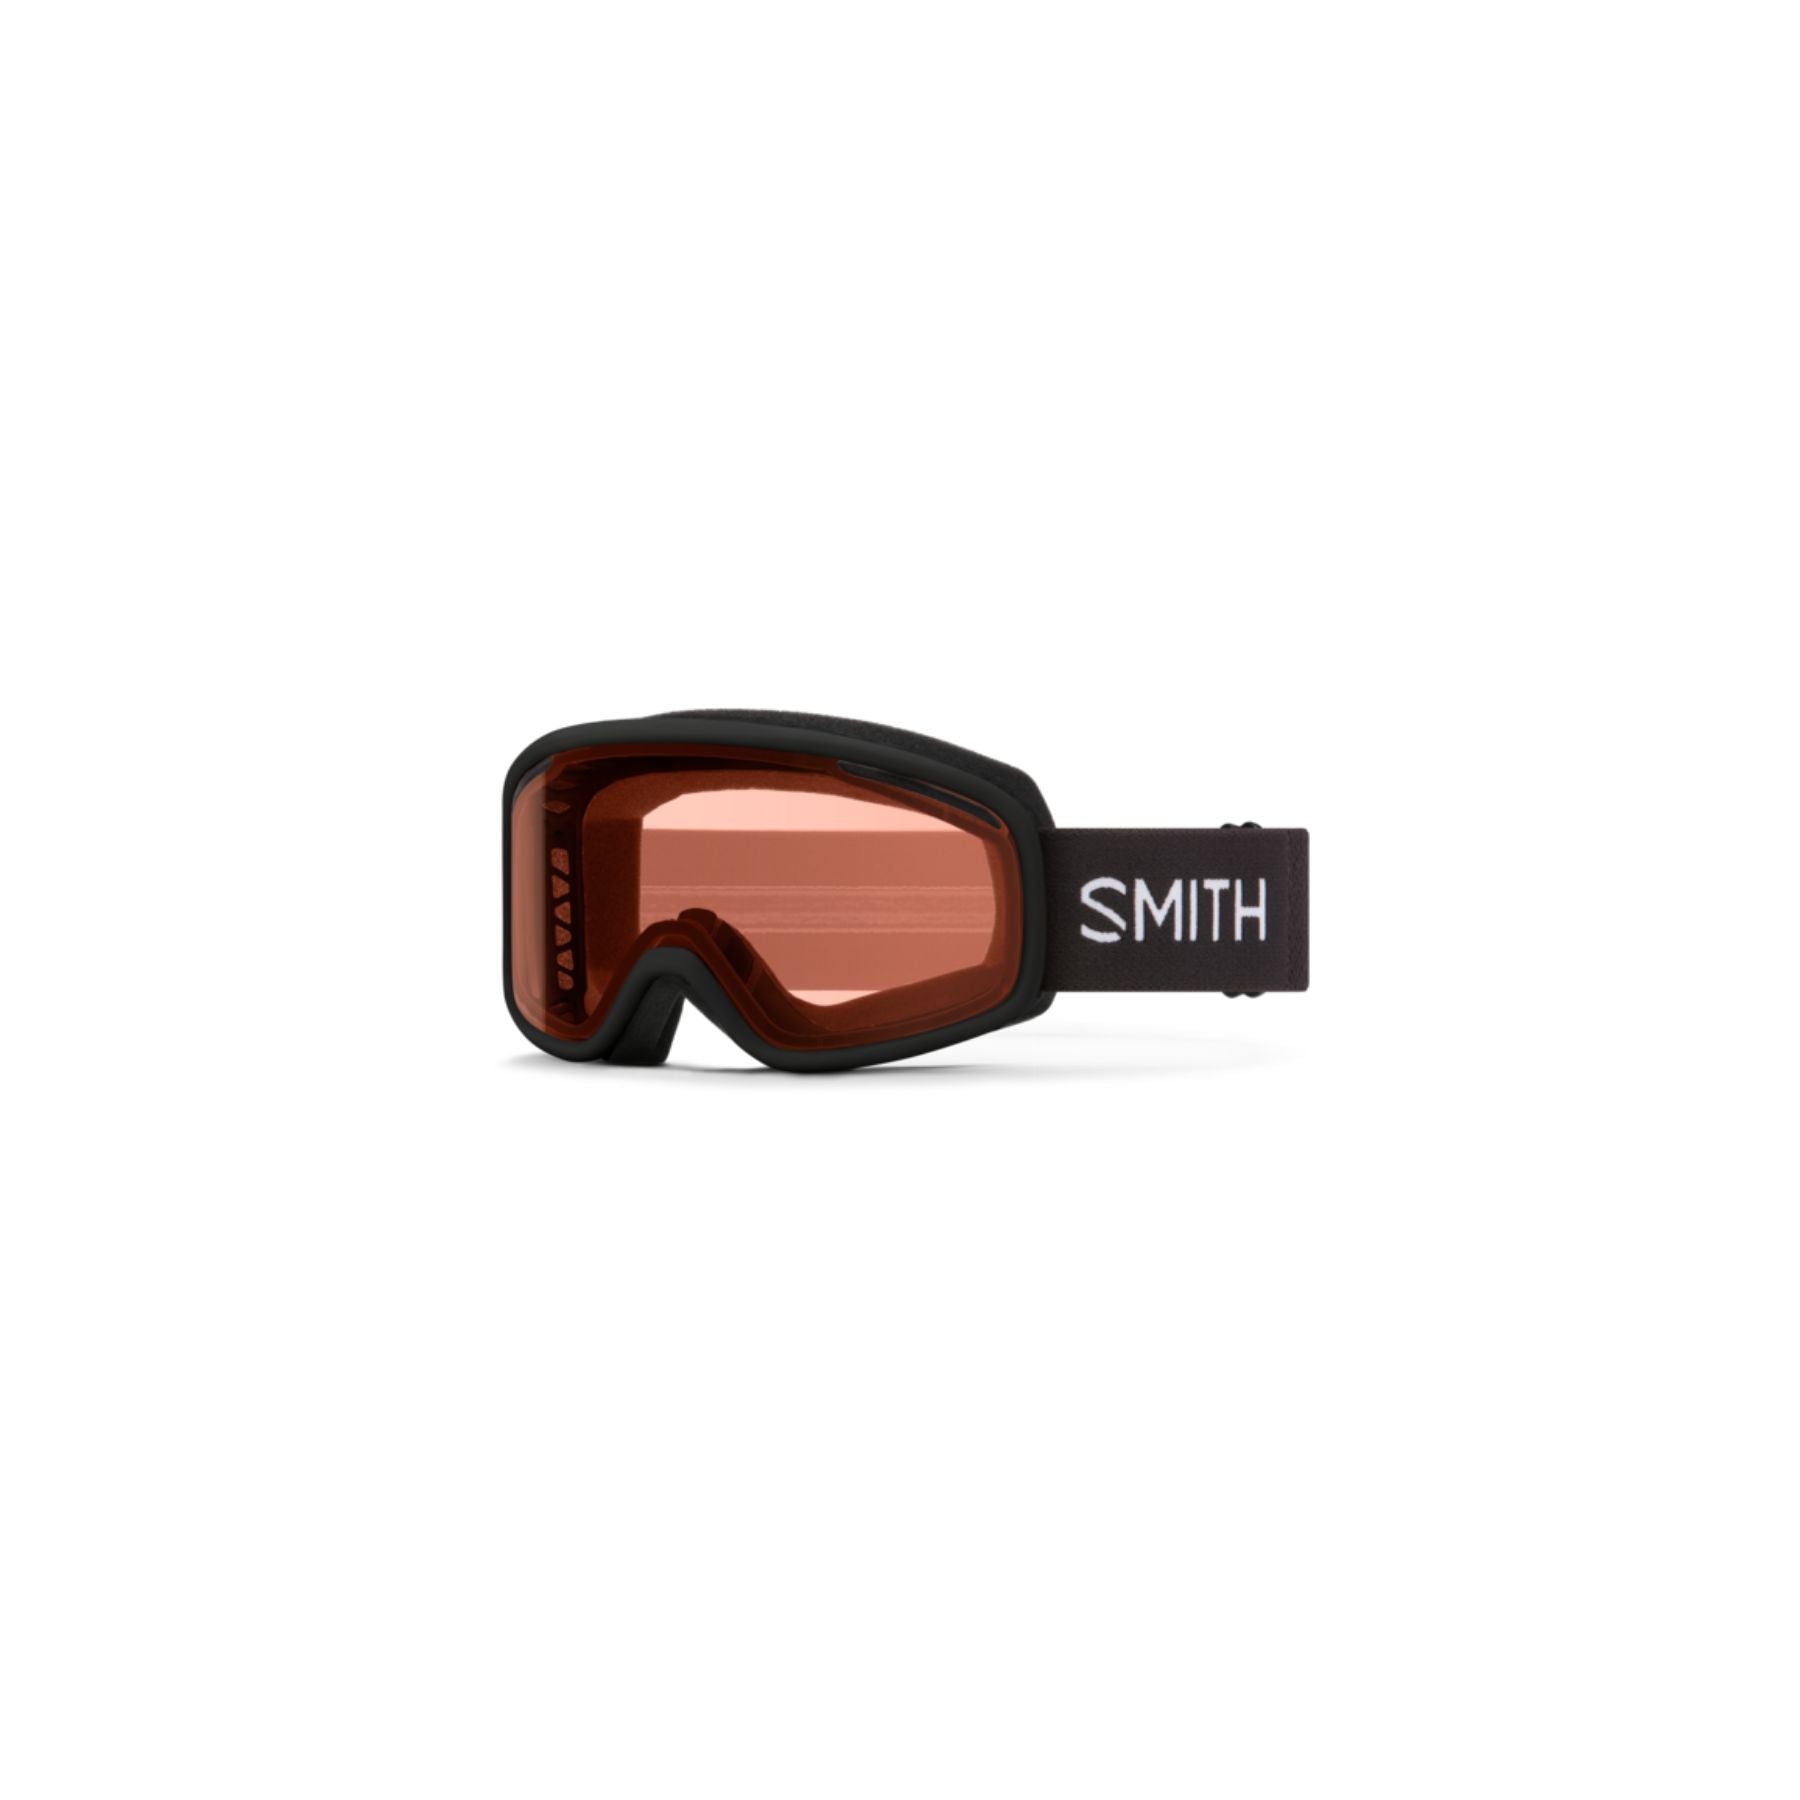 Smith Vogue Goggles in Black